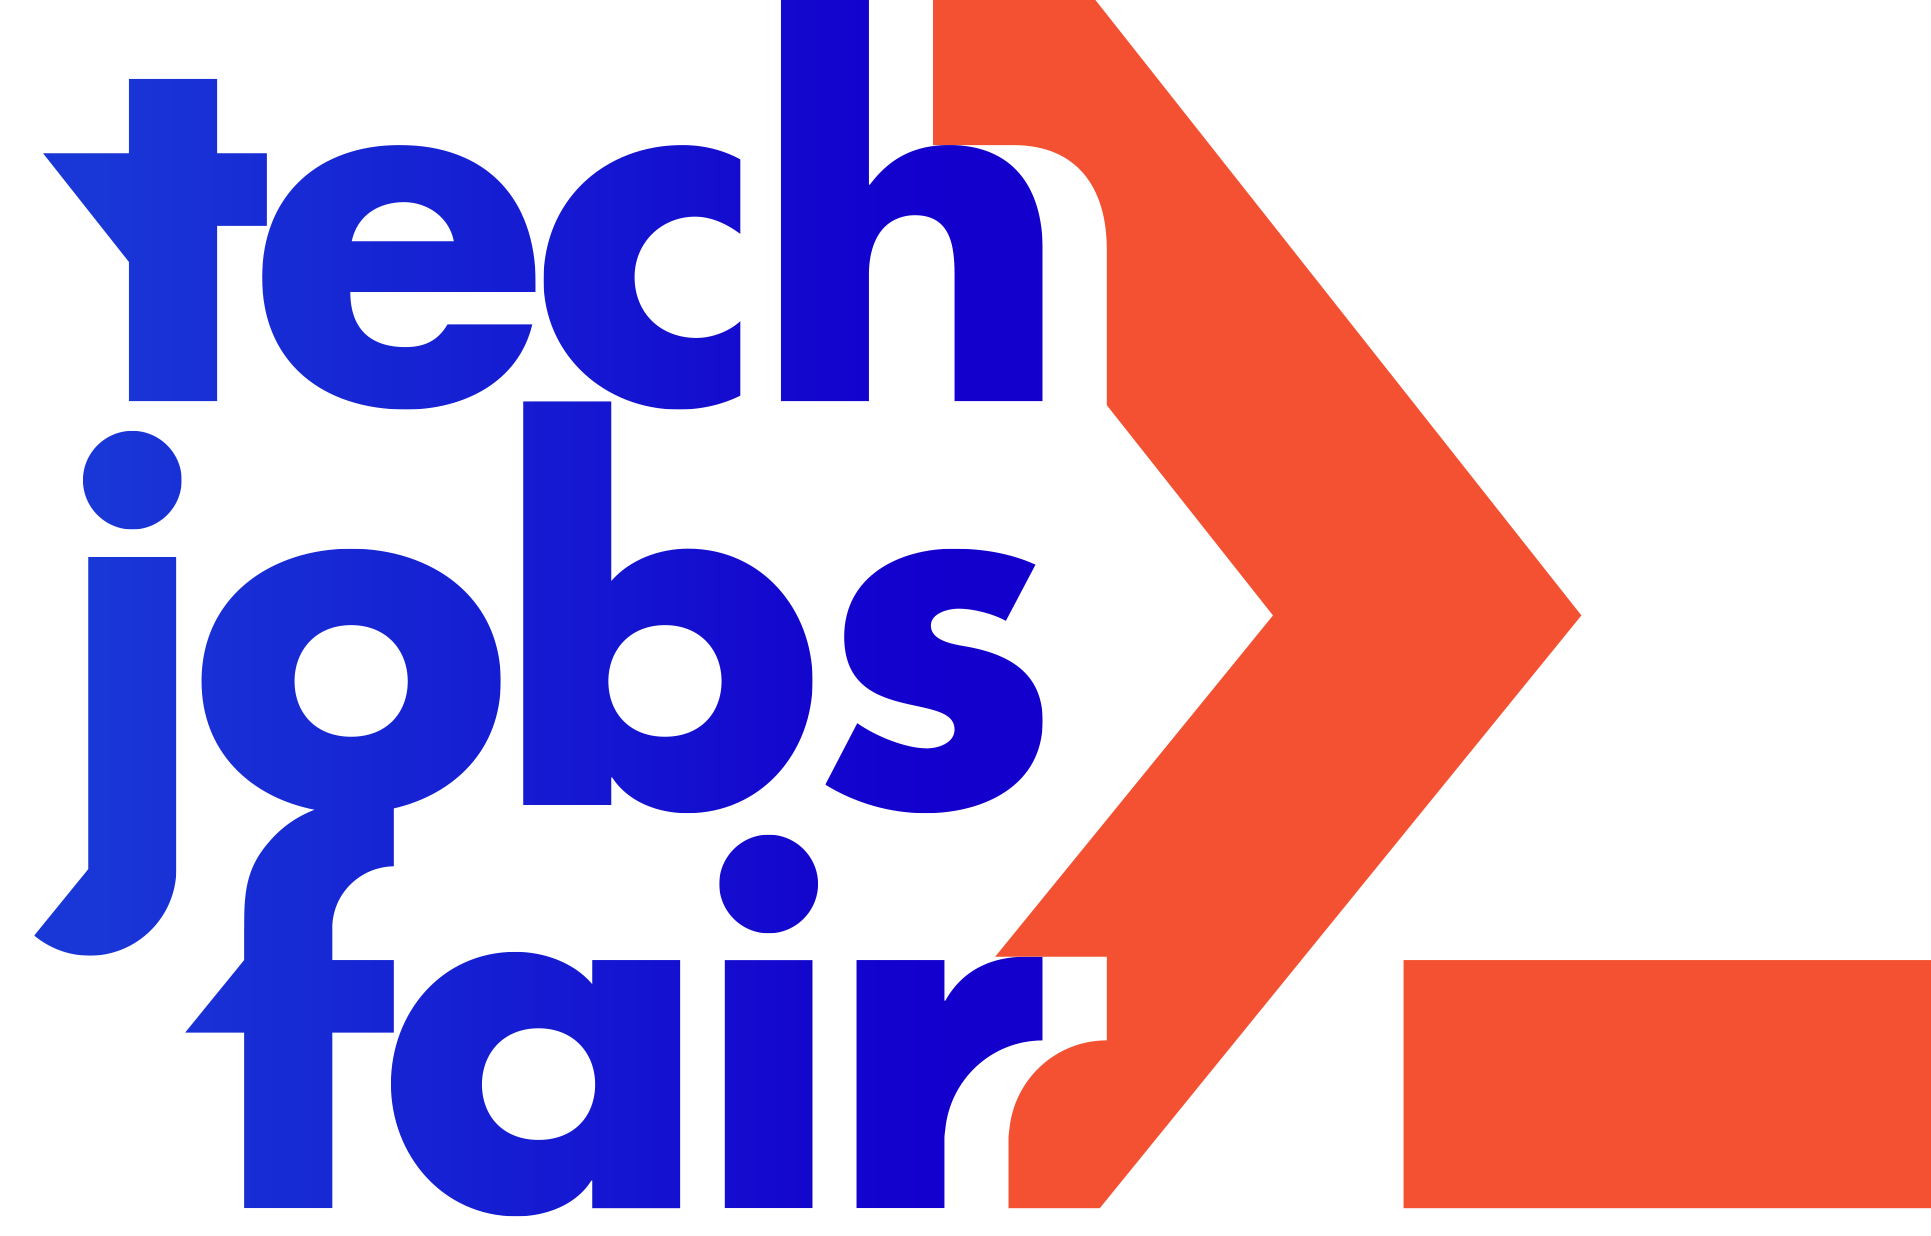 TECH JOBS fair logo